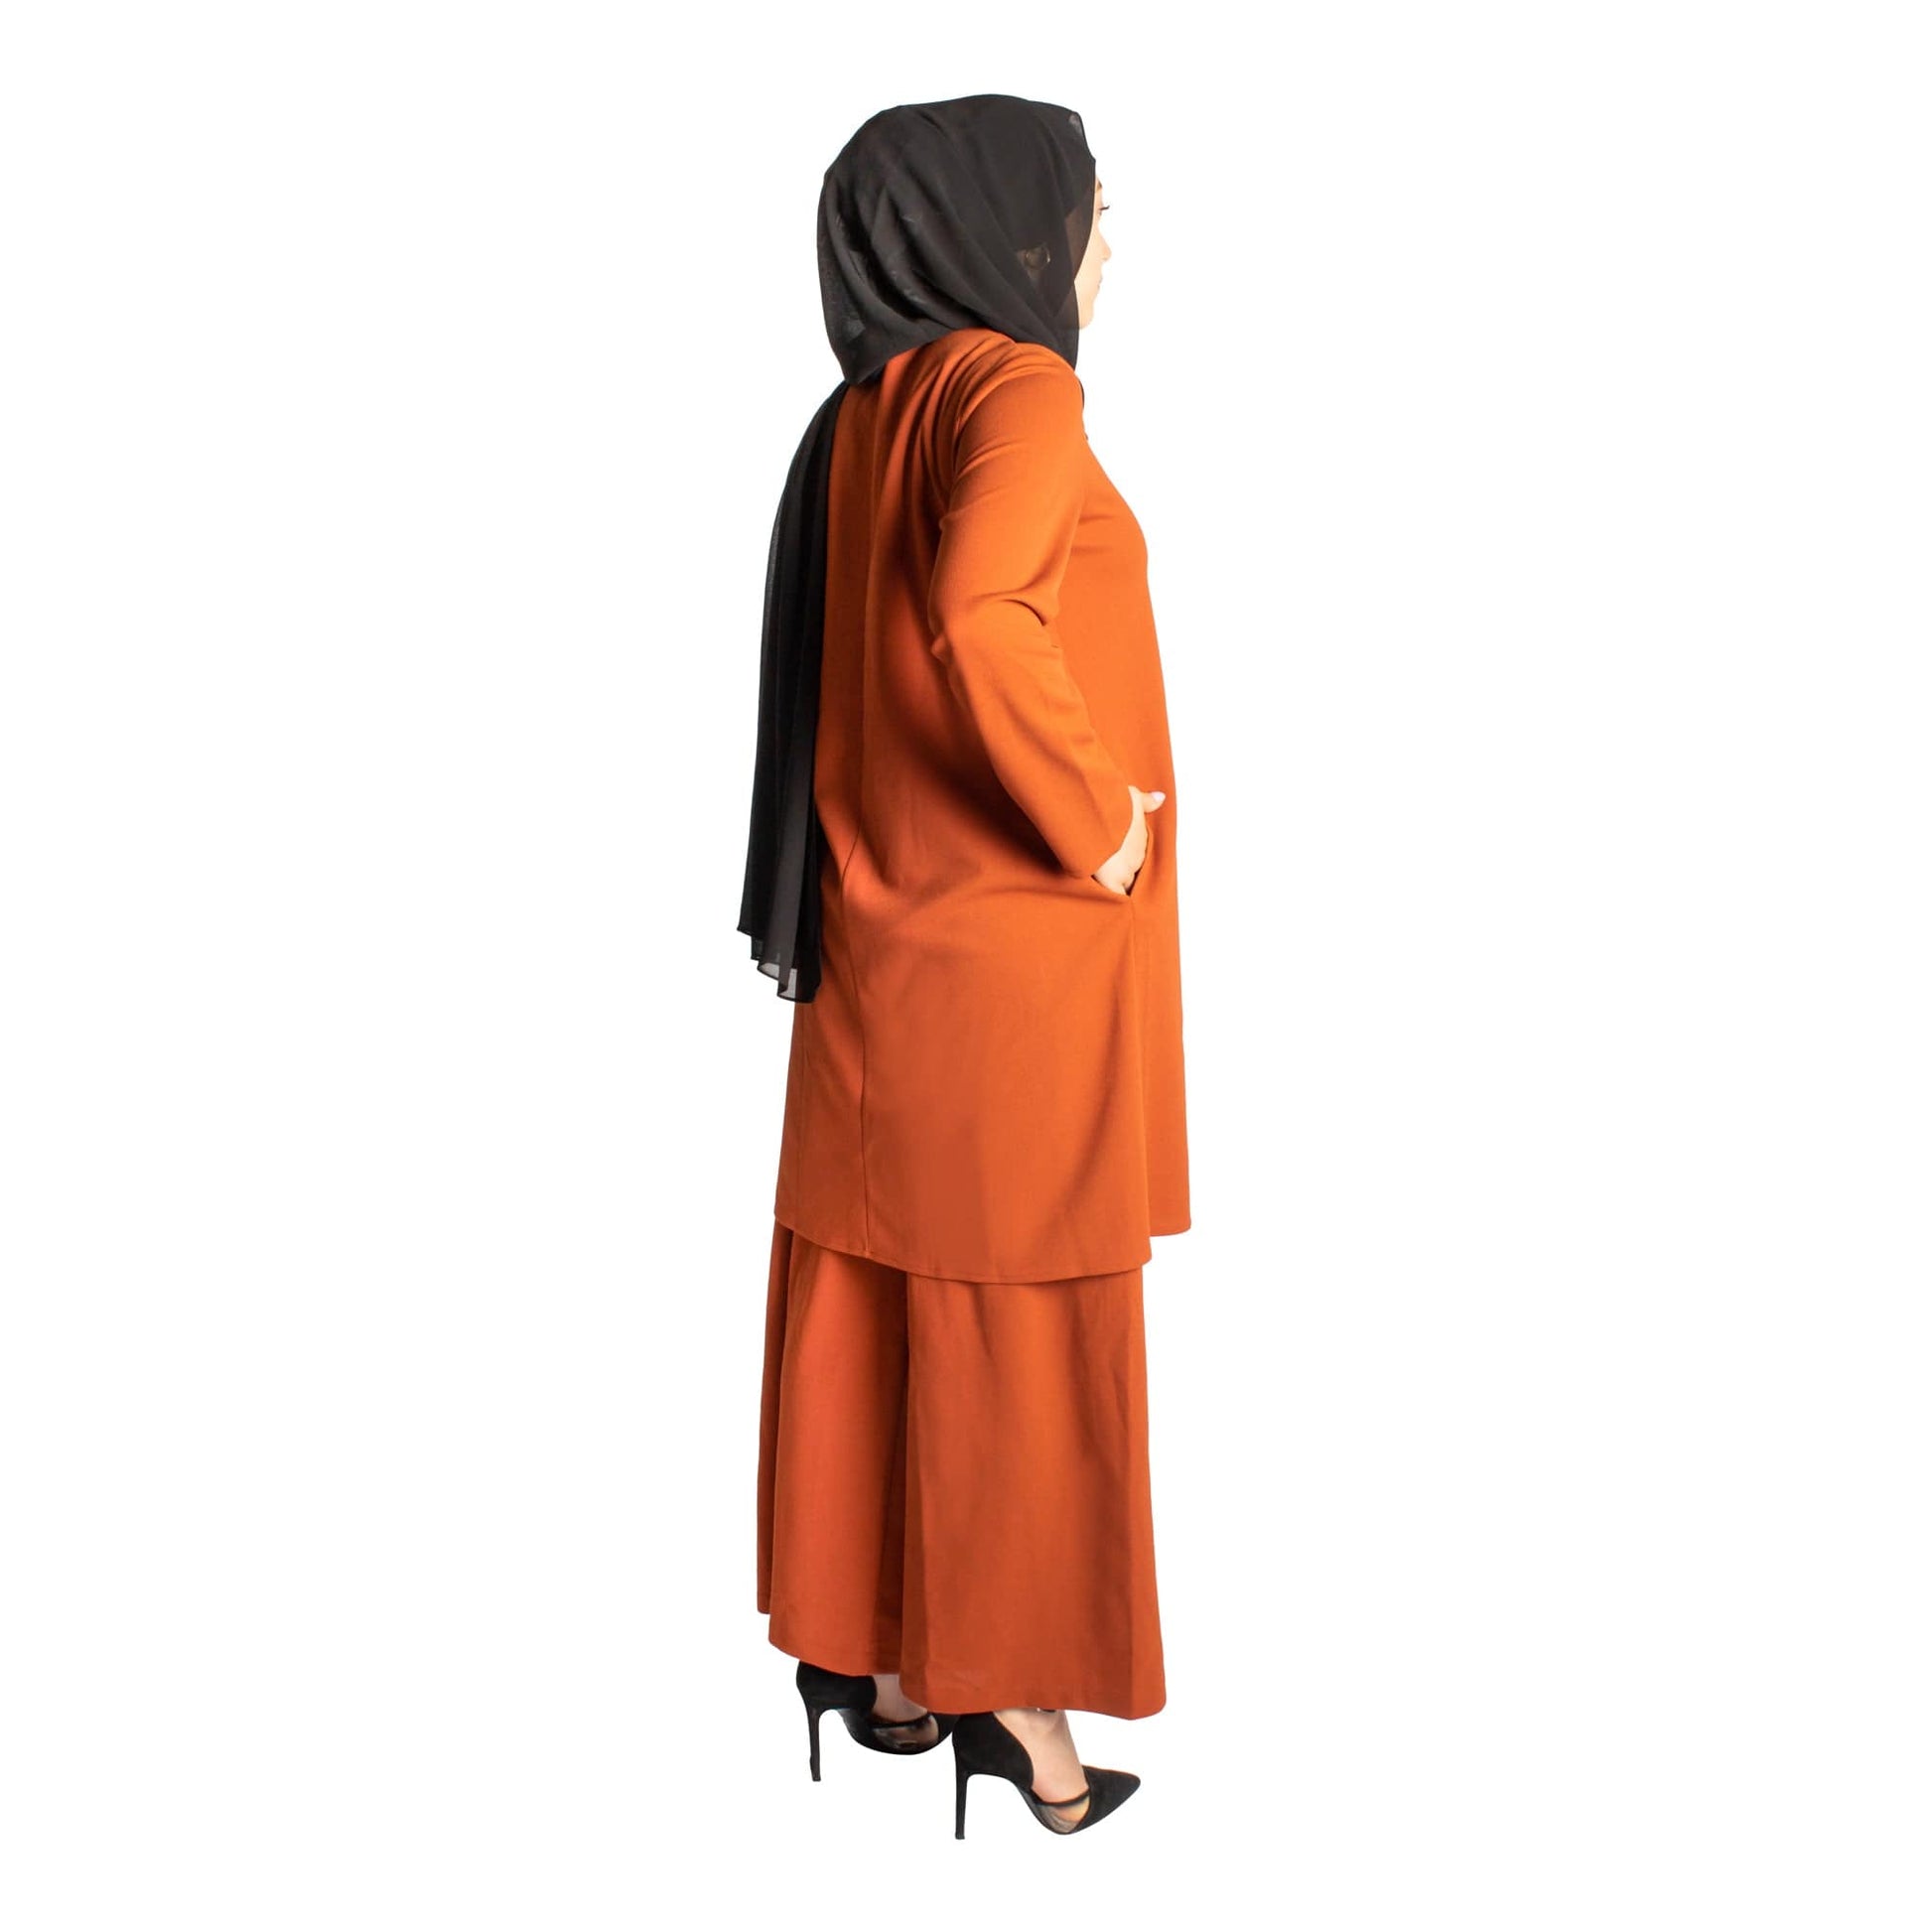 jolienisa Elegant and modest outfit for women - Brick color suit set